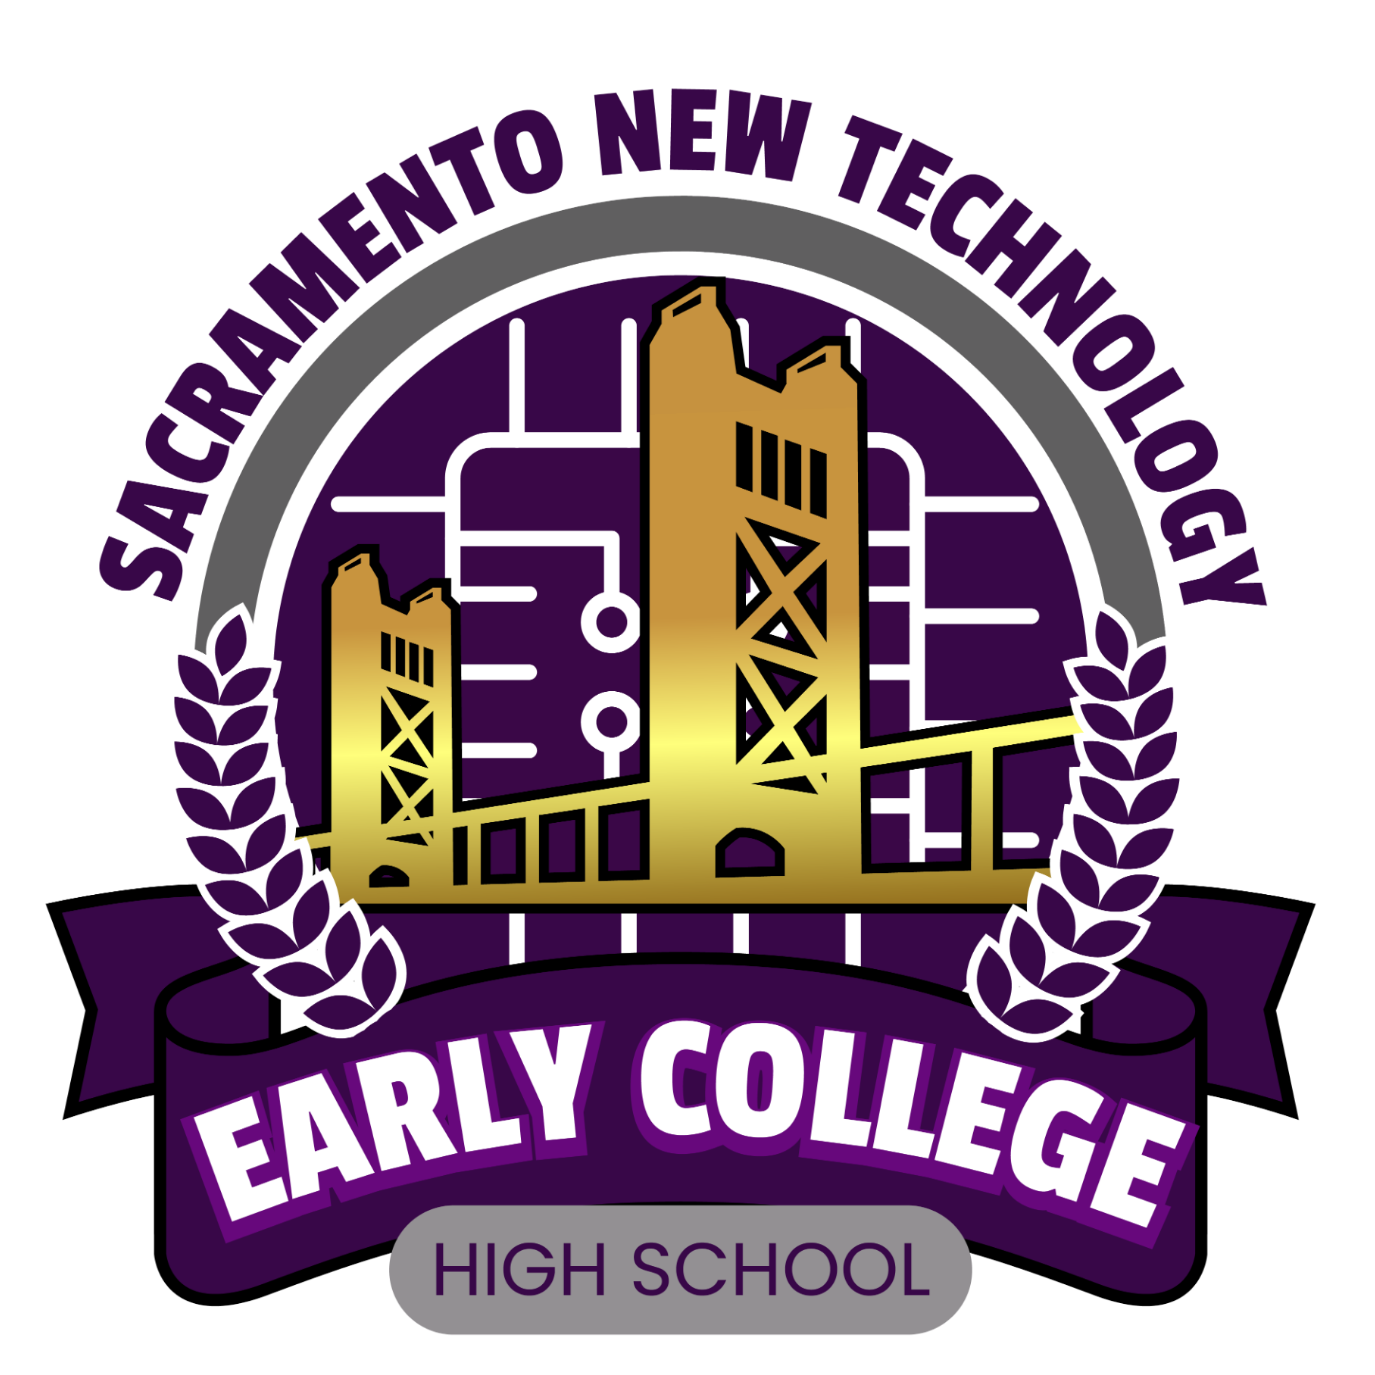 Sacramento New Technology High School